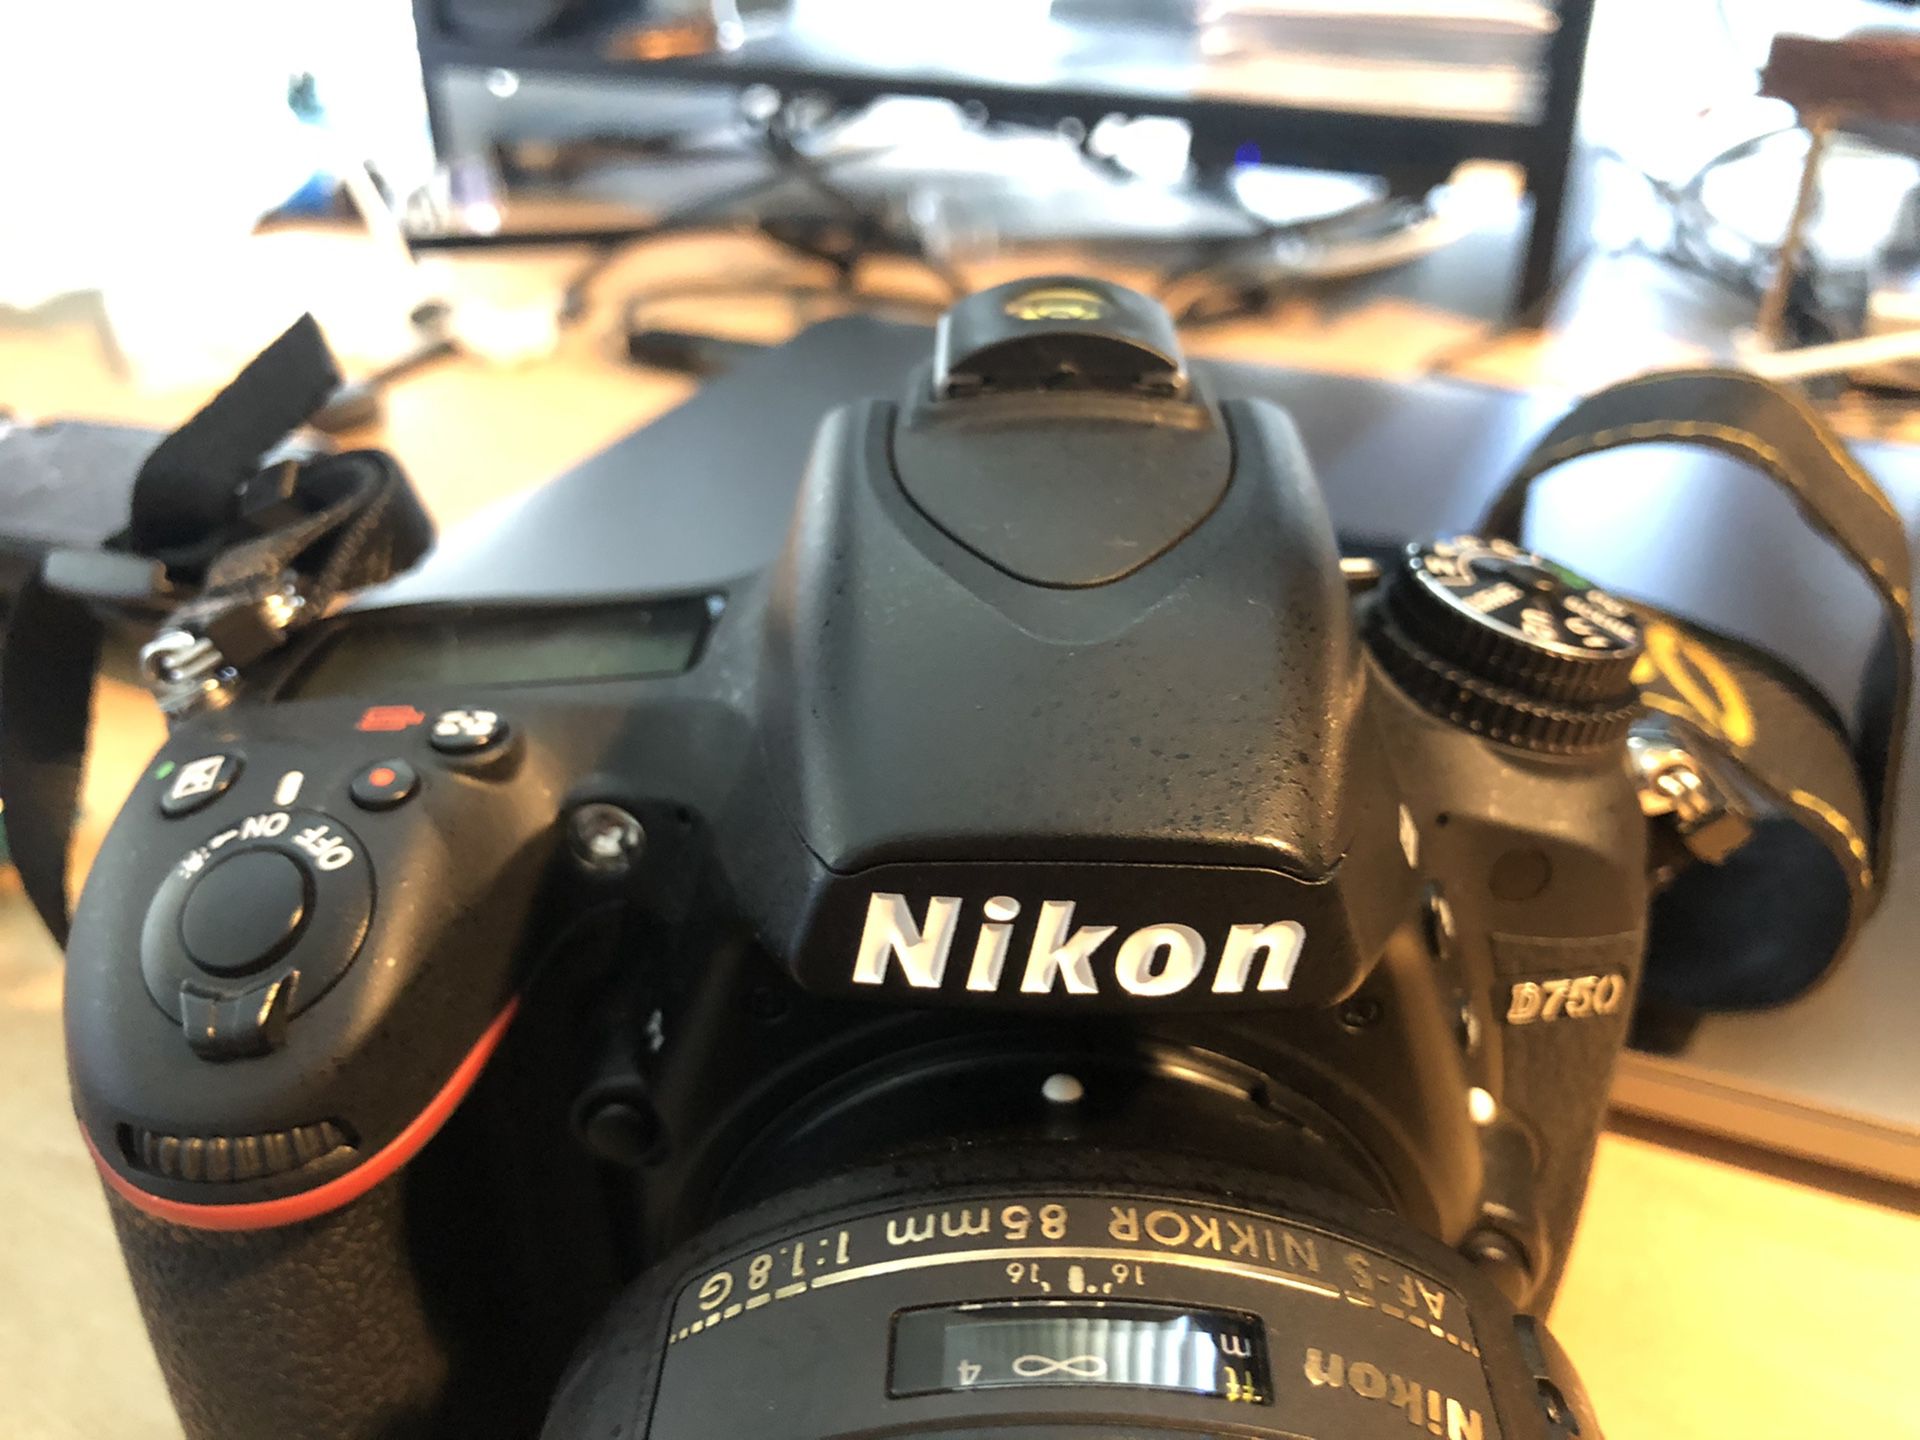 Nikon D750 (lenses for sale too)